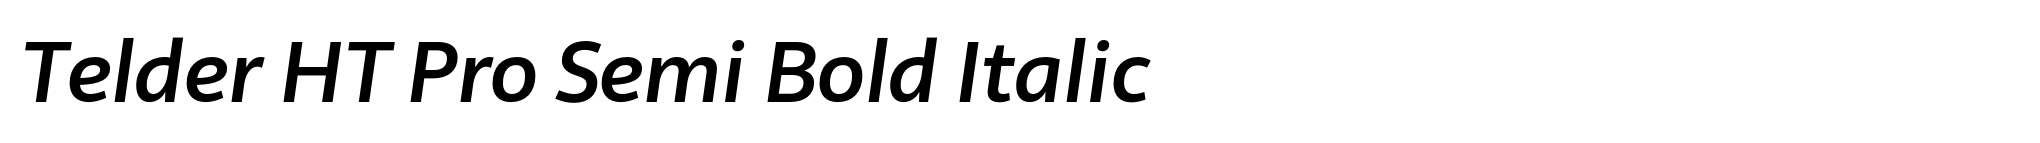 Telder HT Pro Semi Bold Italic image